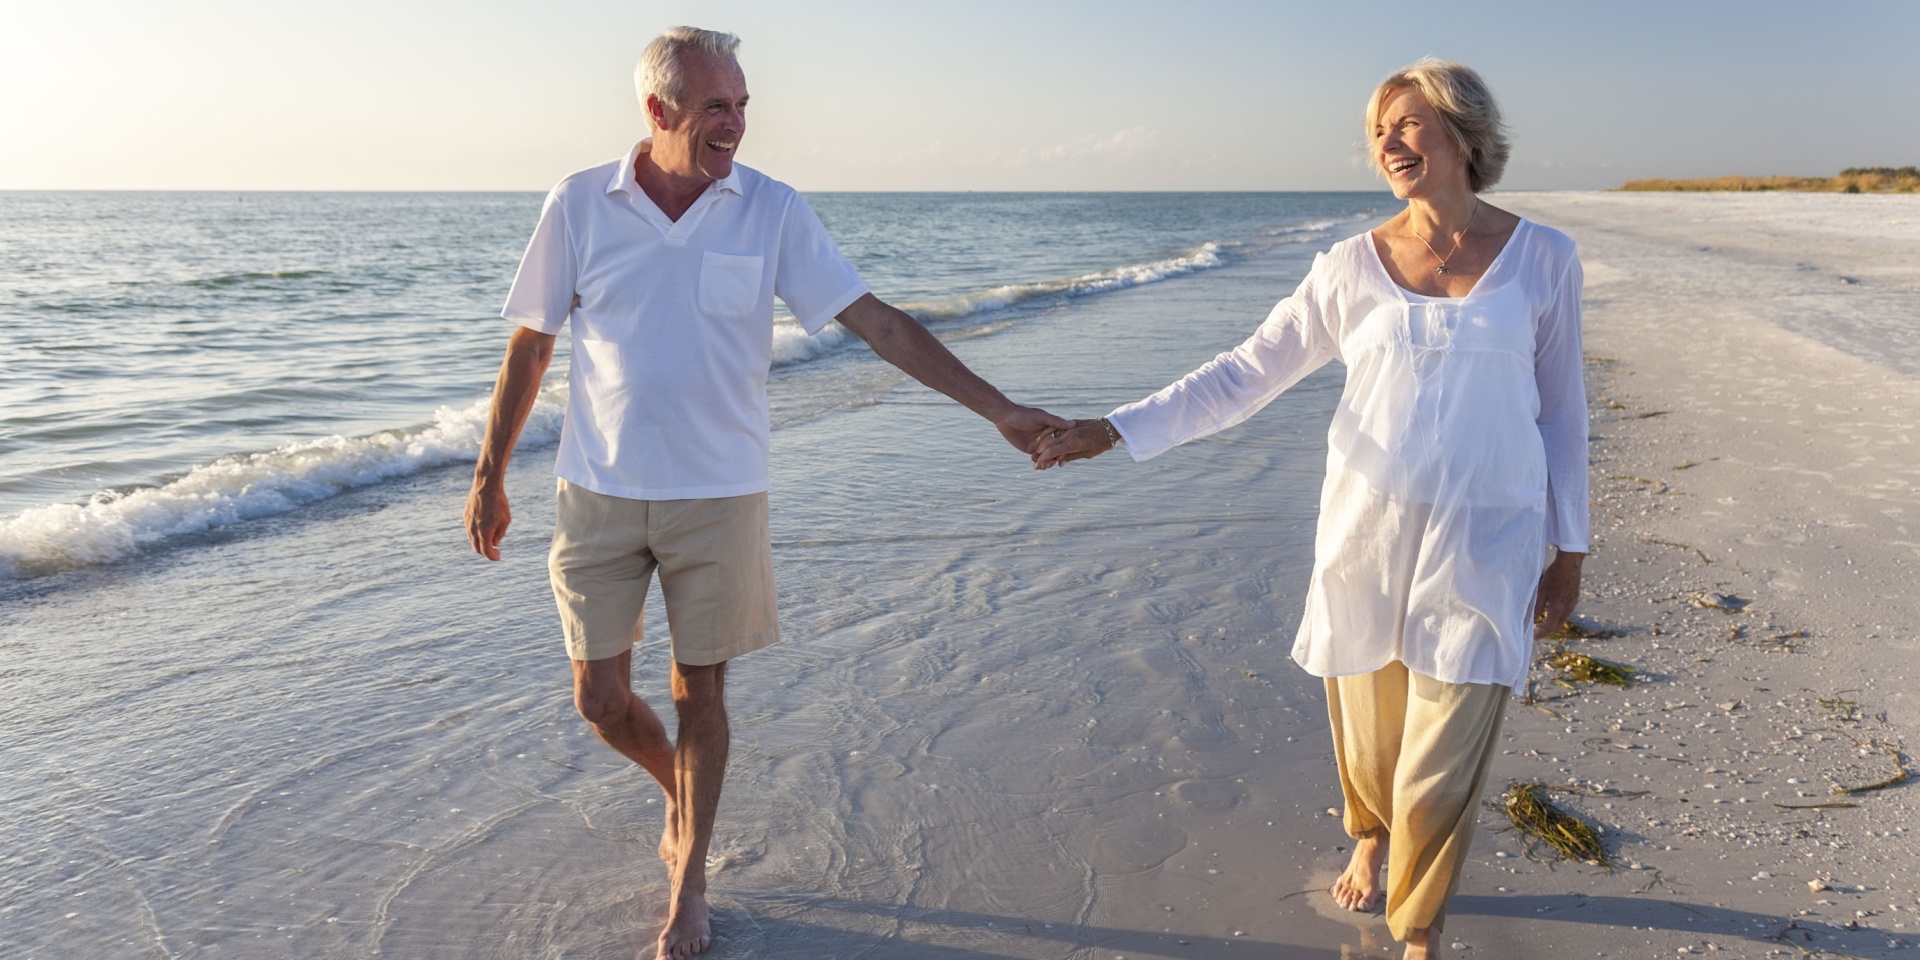 Happy senior couple walking on beach